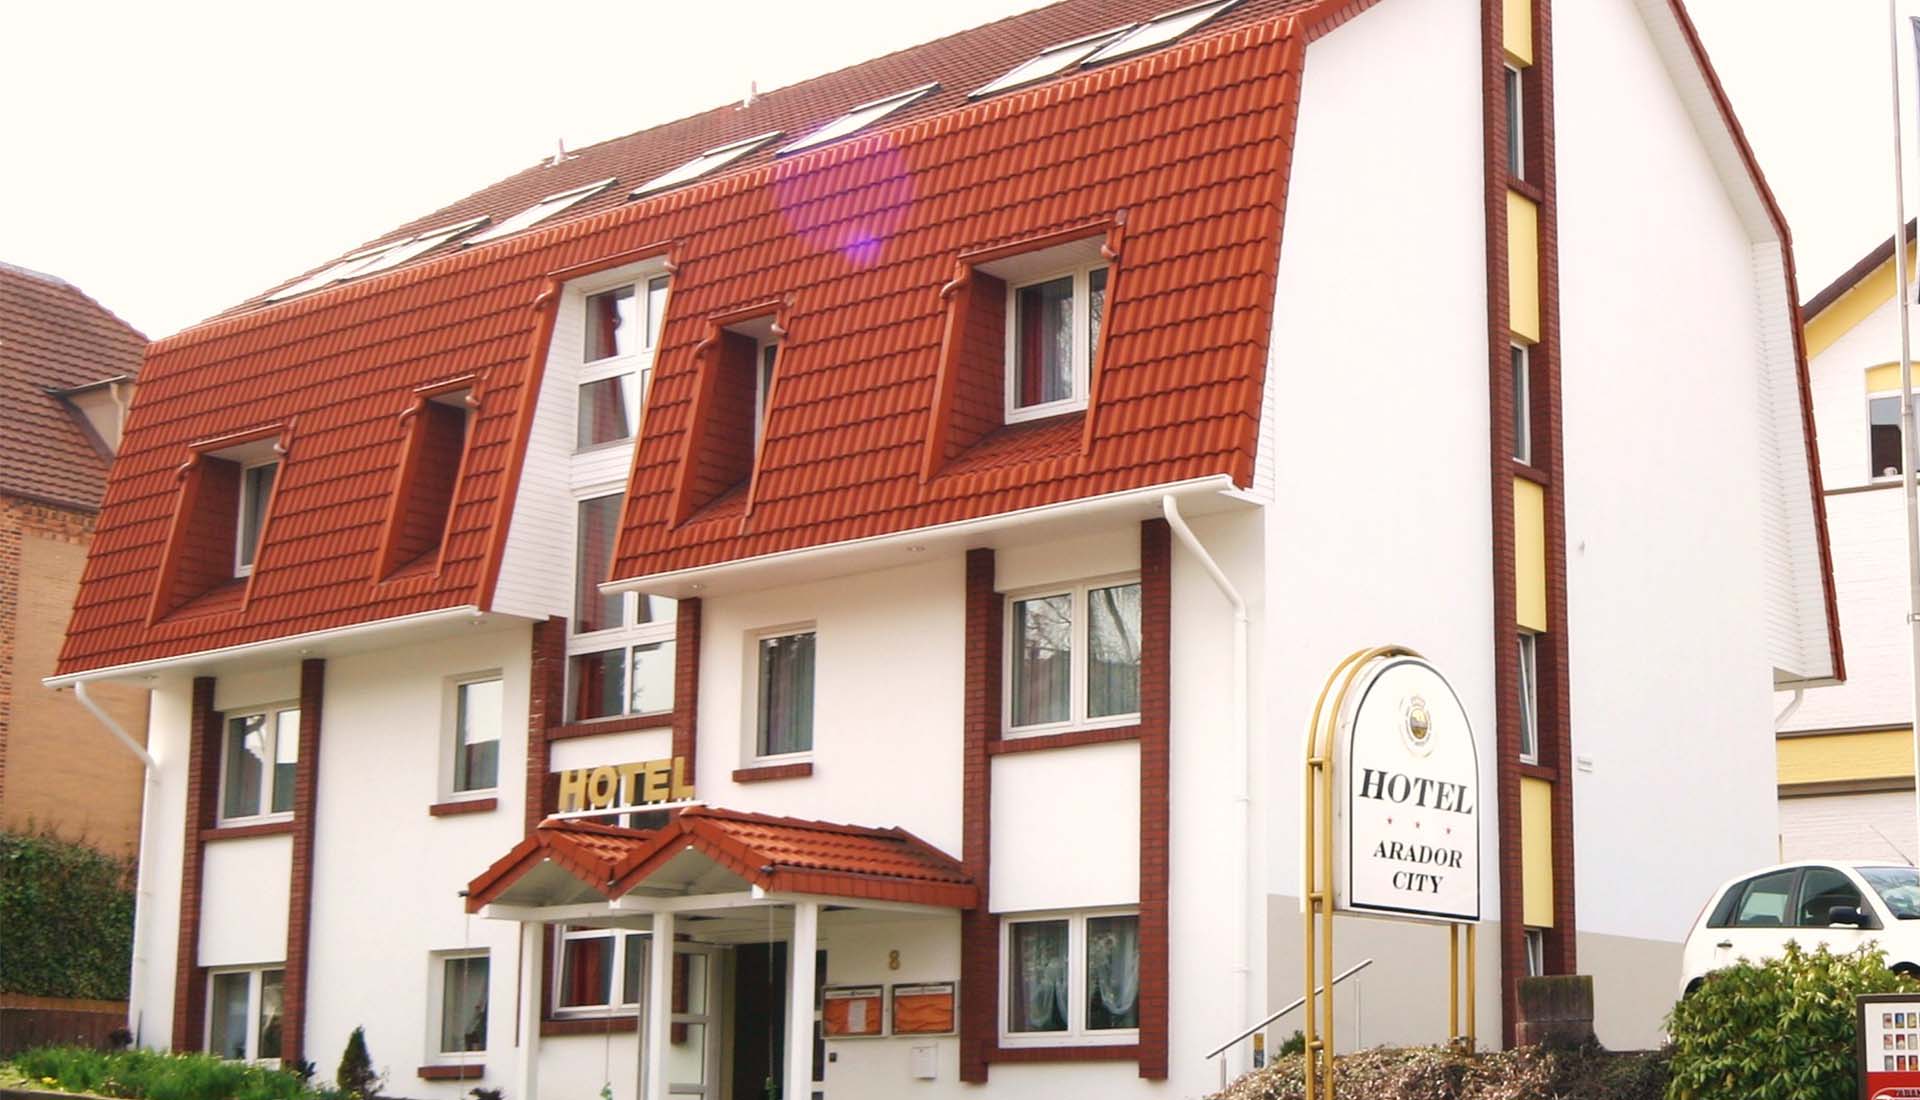 Bild 6 Arador-City Hotel in Bad Oeynhausen